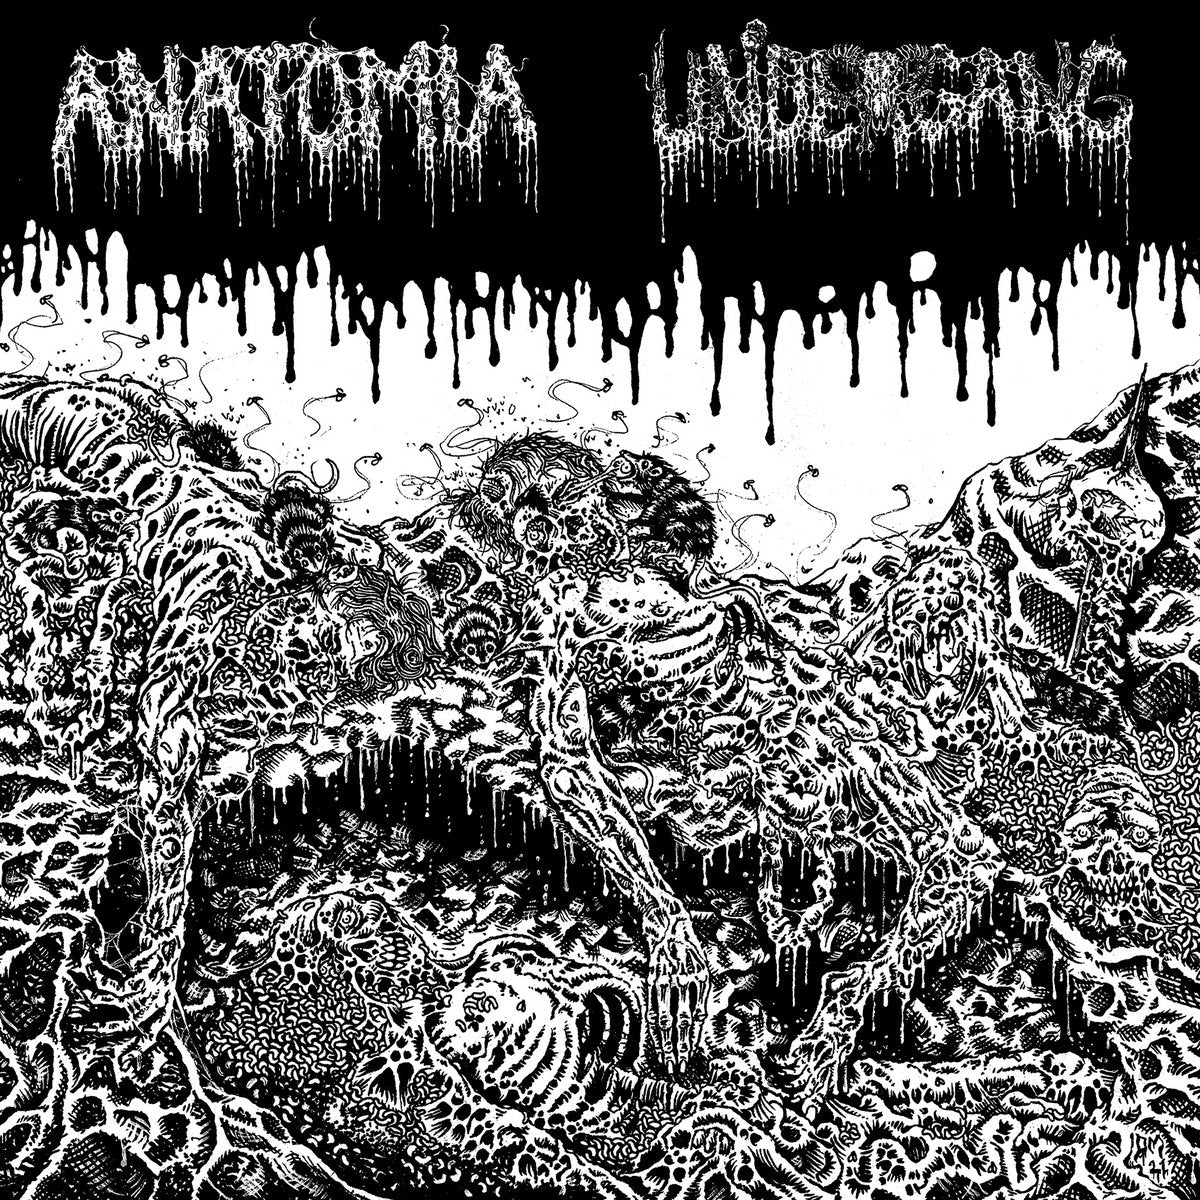 UNDERGANG & ANATOMIA "Split" LP